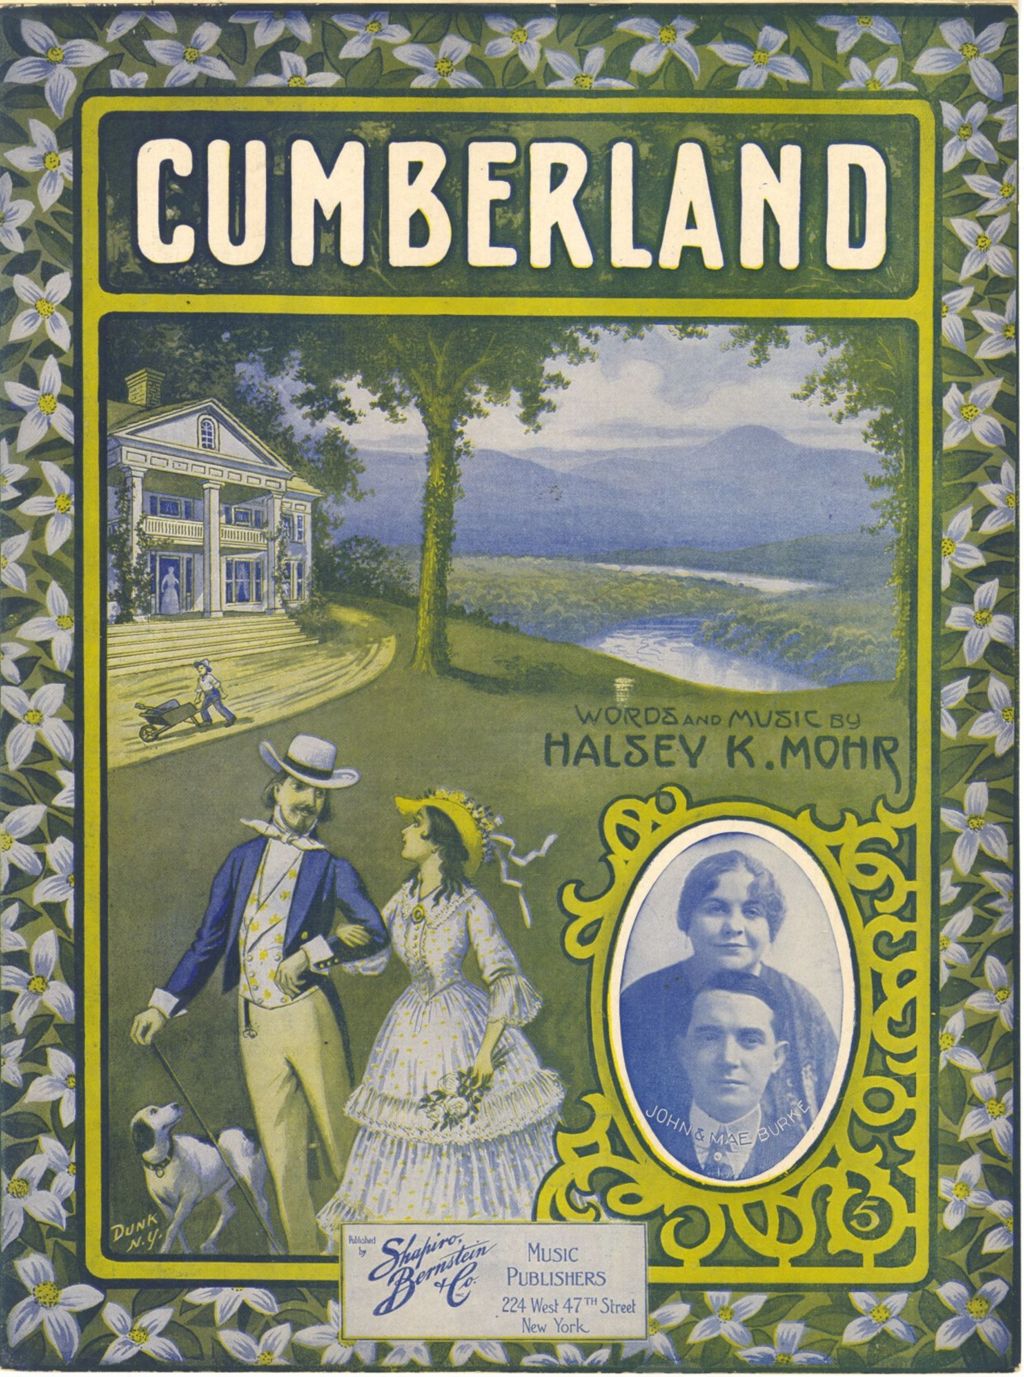 Miniature of Cumberland